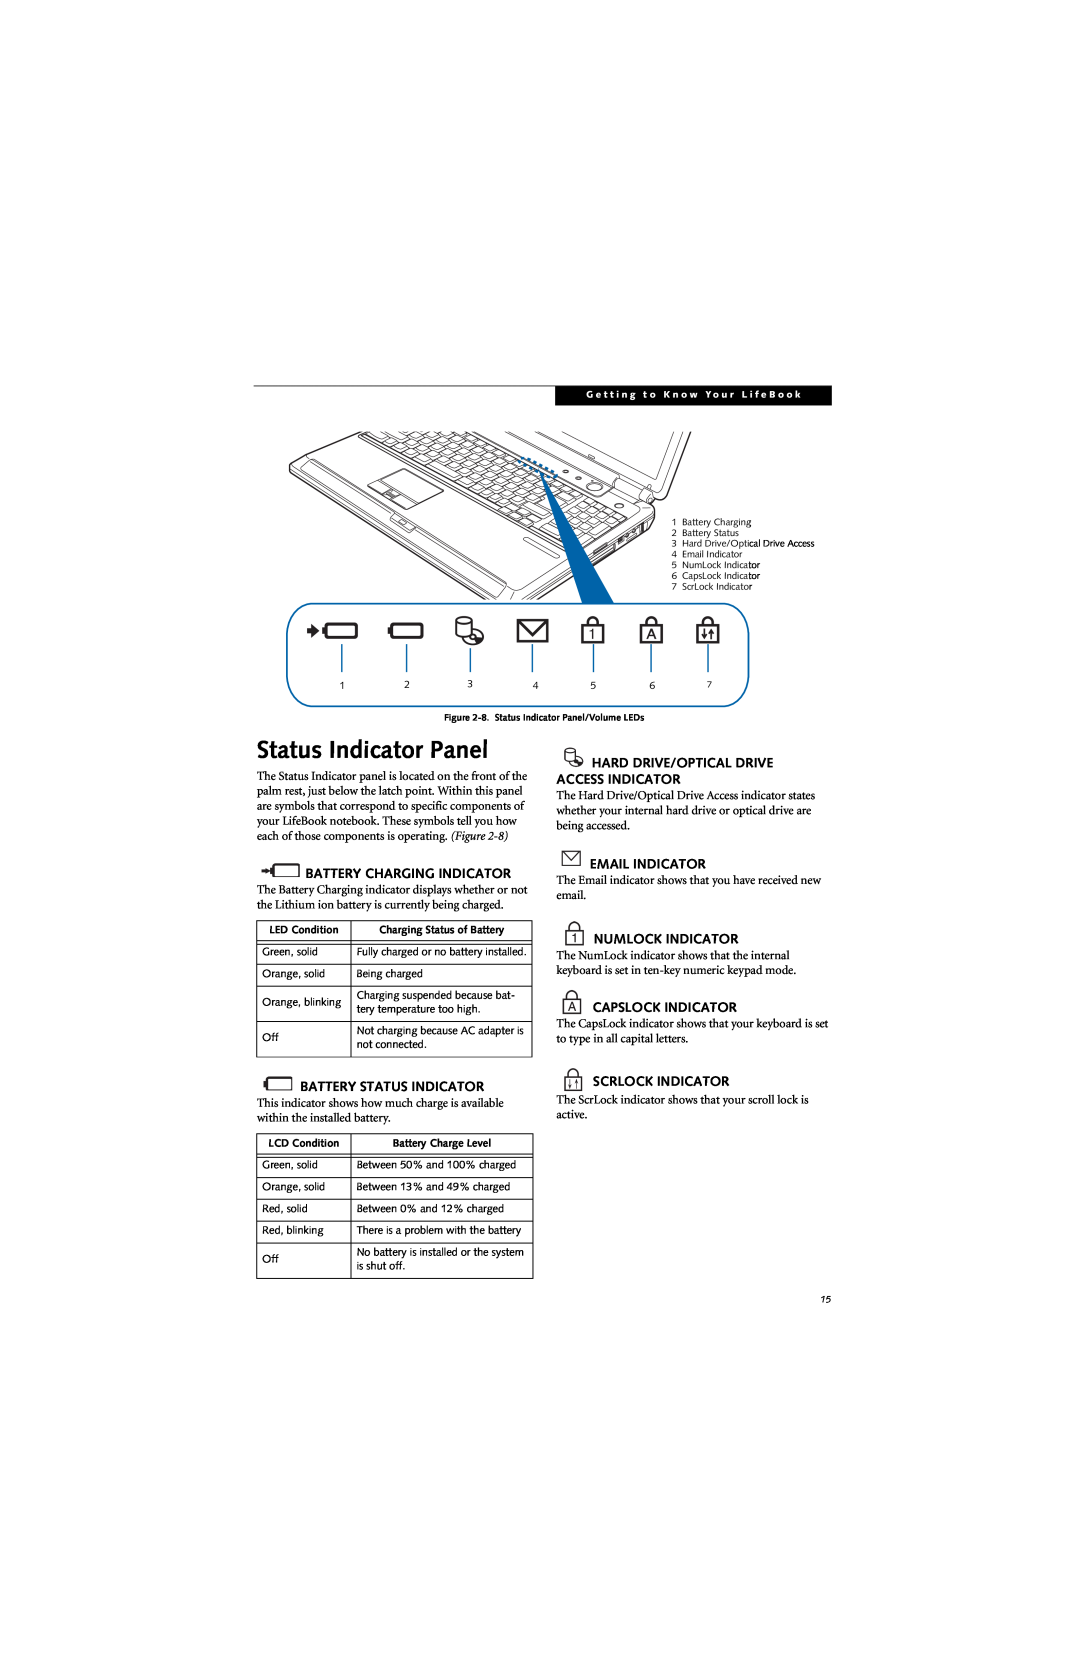 Fujitsu N6460 manual Status Indicator Panel, Hard Drive/Optical Drive Access Indicator, Battery Charging Indicator 